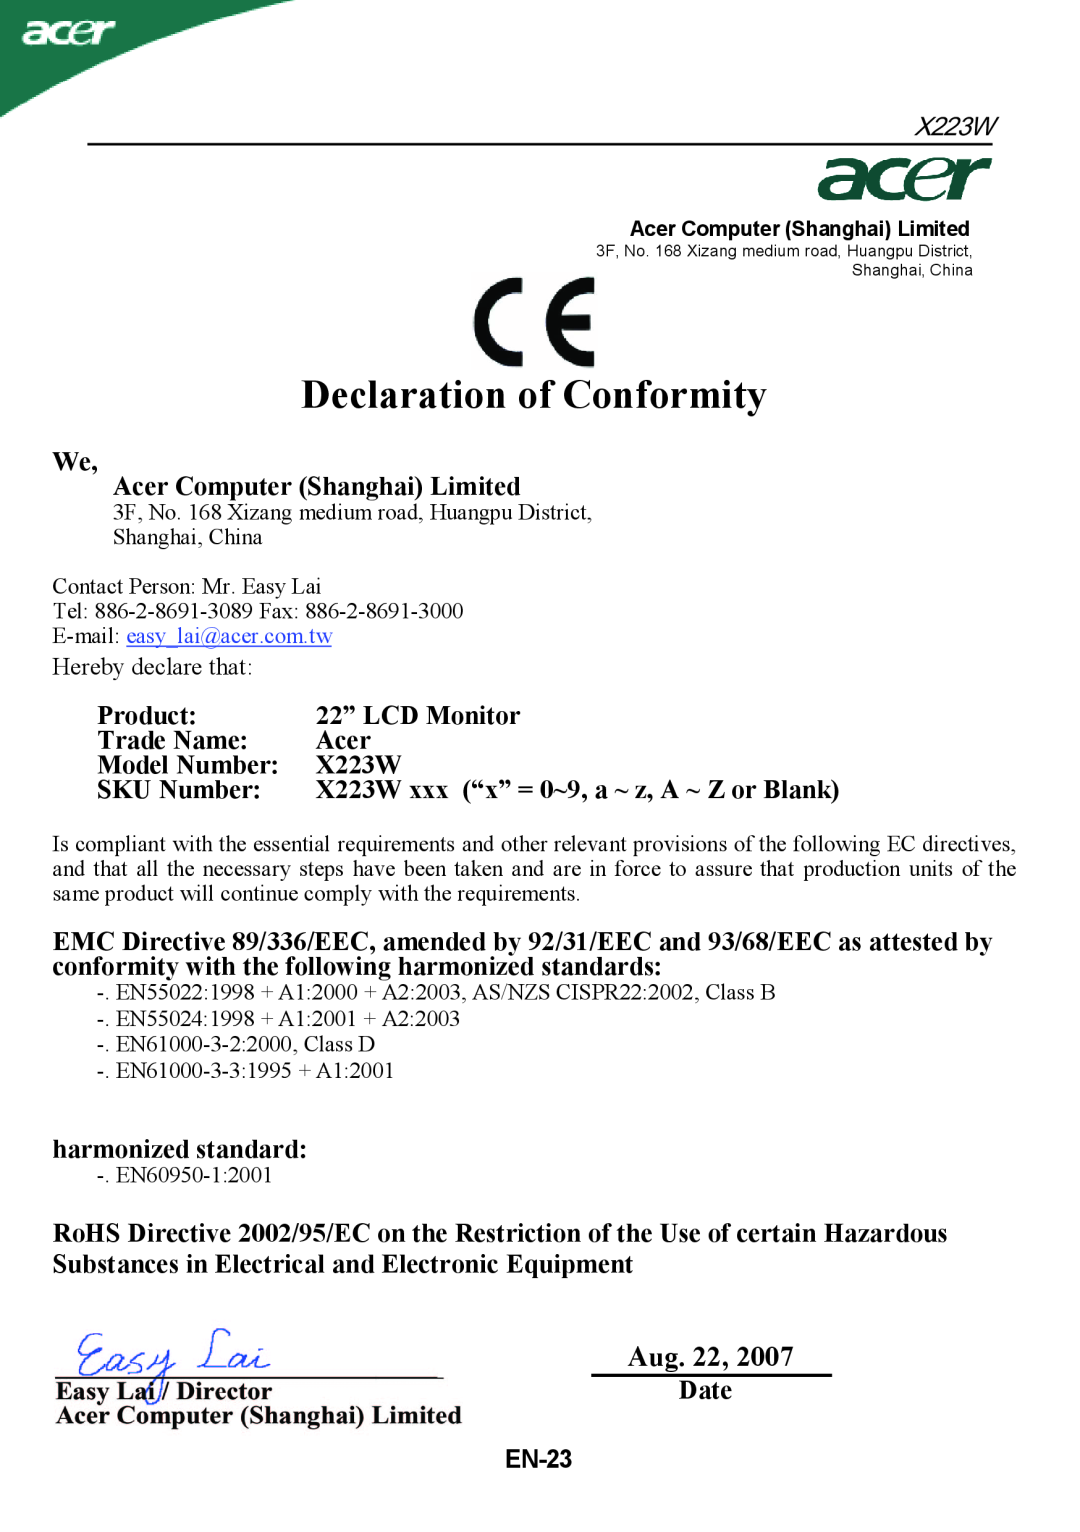 Acer X223W manual Declaration of Conformity, Aug 